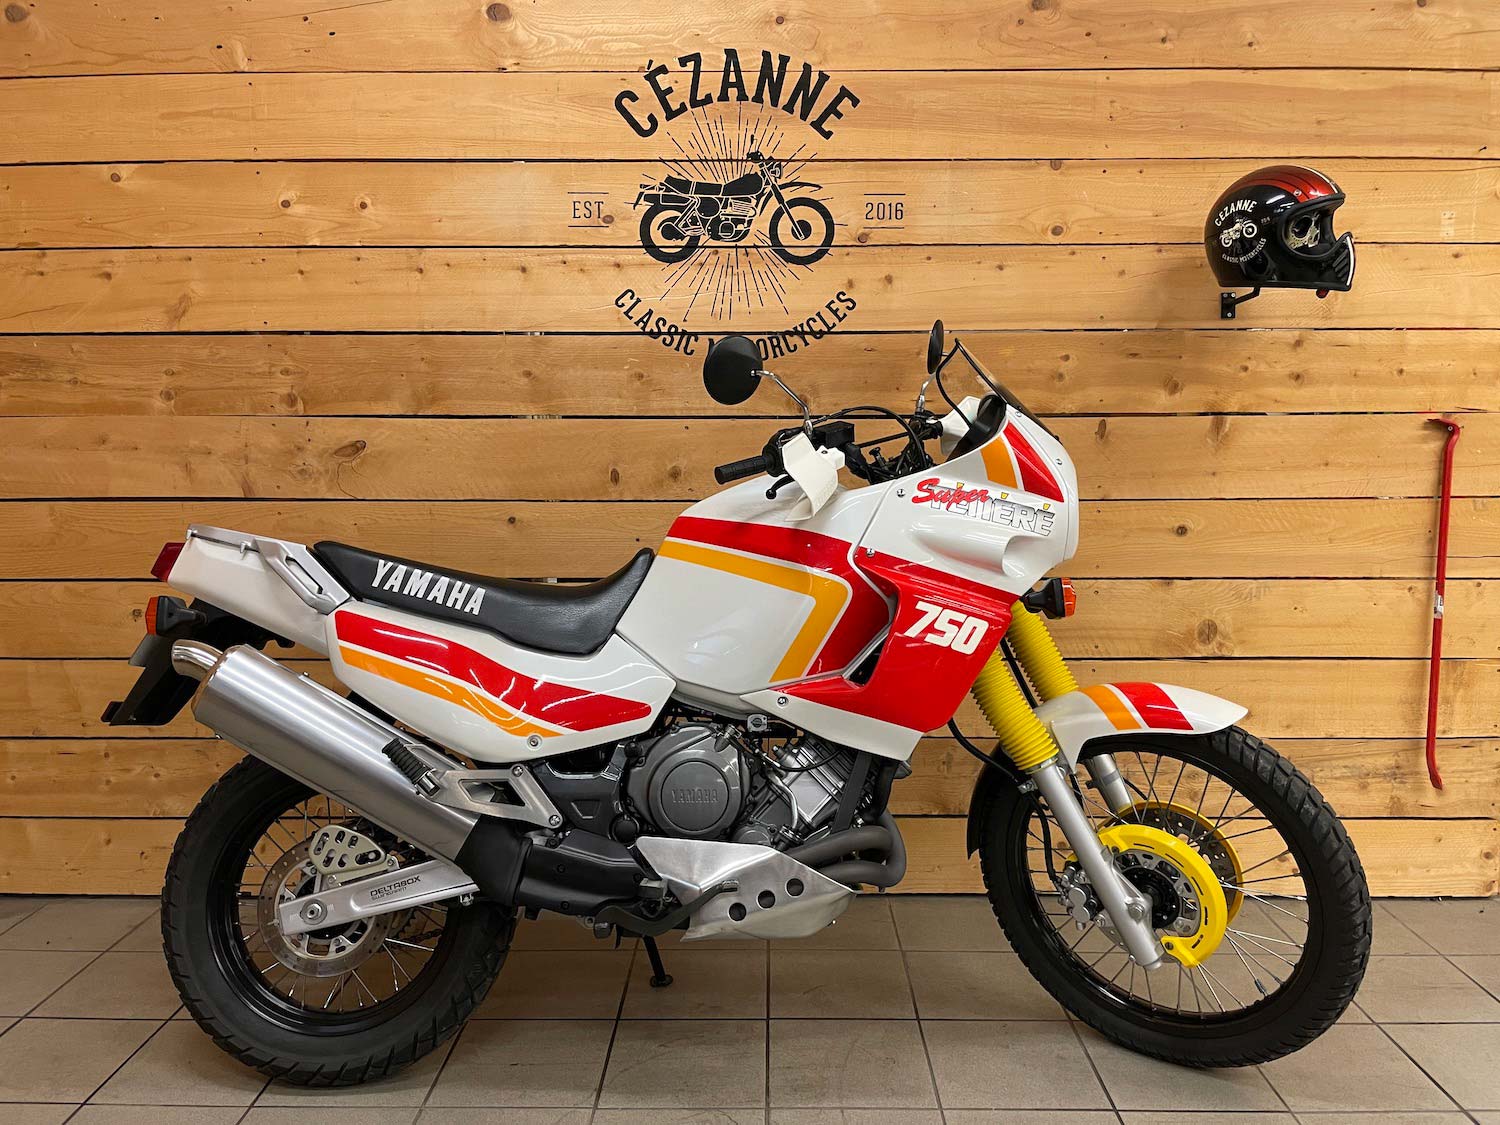 Yamaha_XTZ_750_cezanne_classic_motorcycles_3-142.jpg